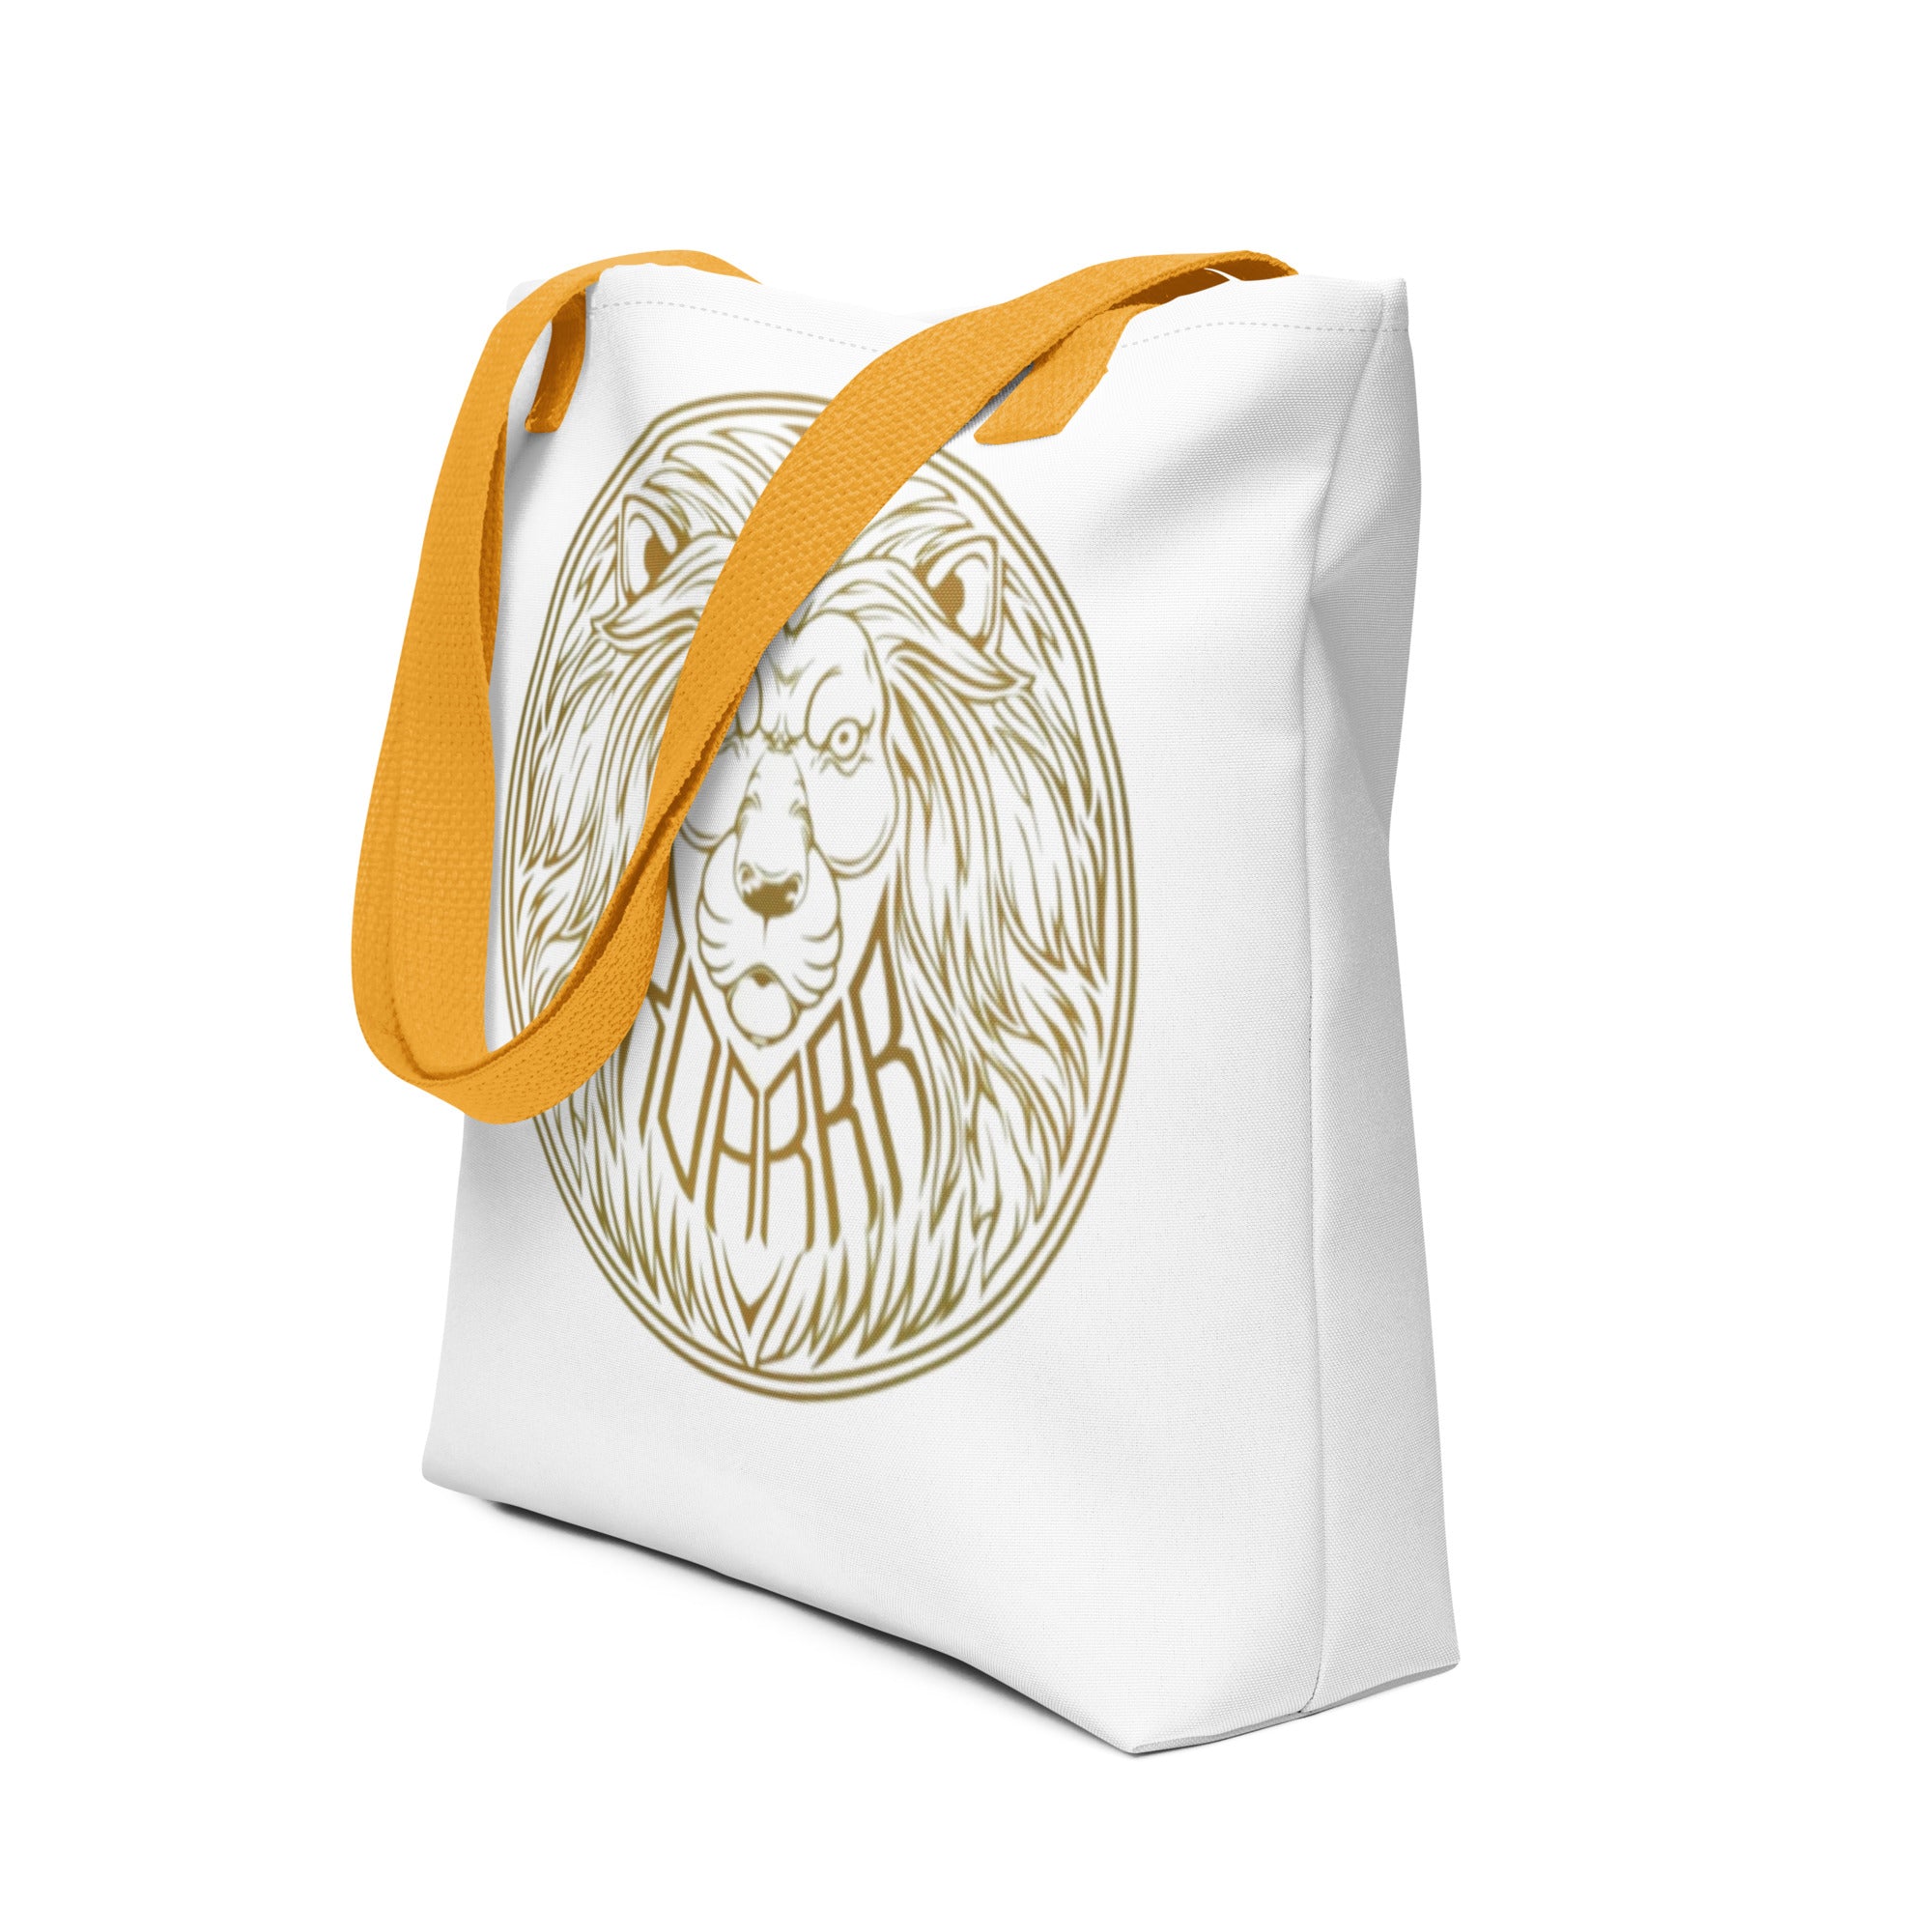 Lion - Tote bag